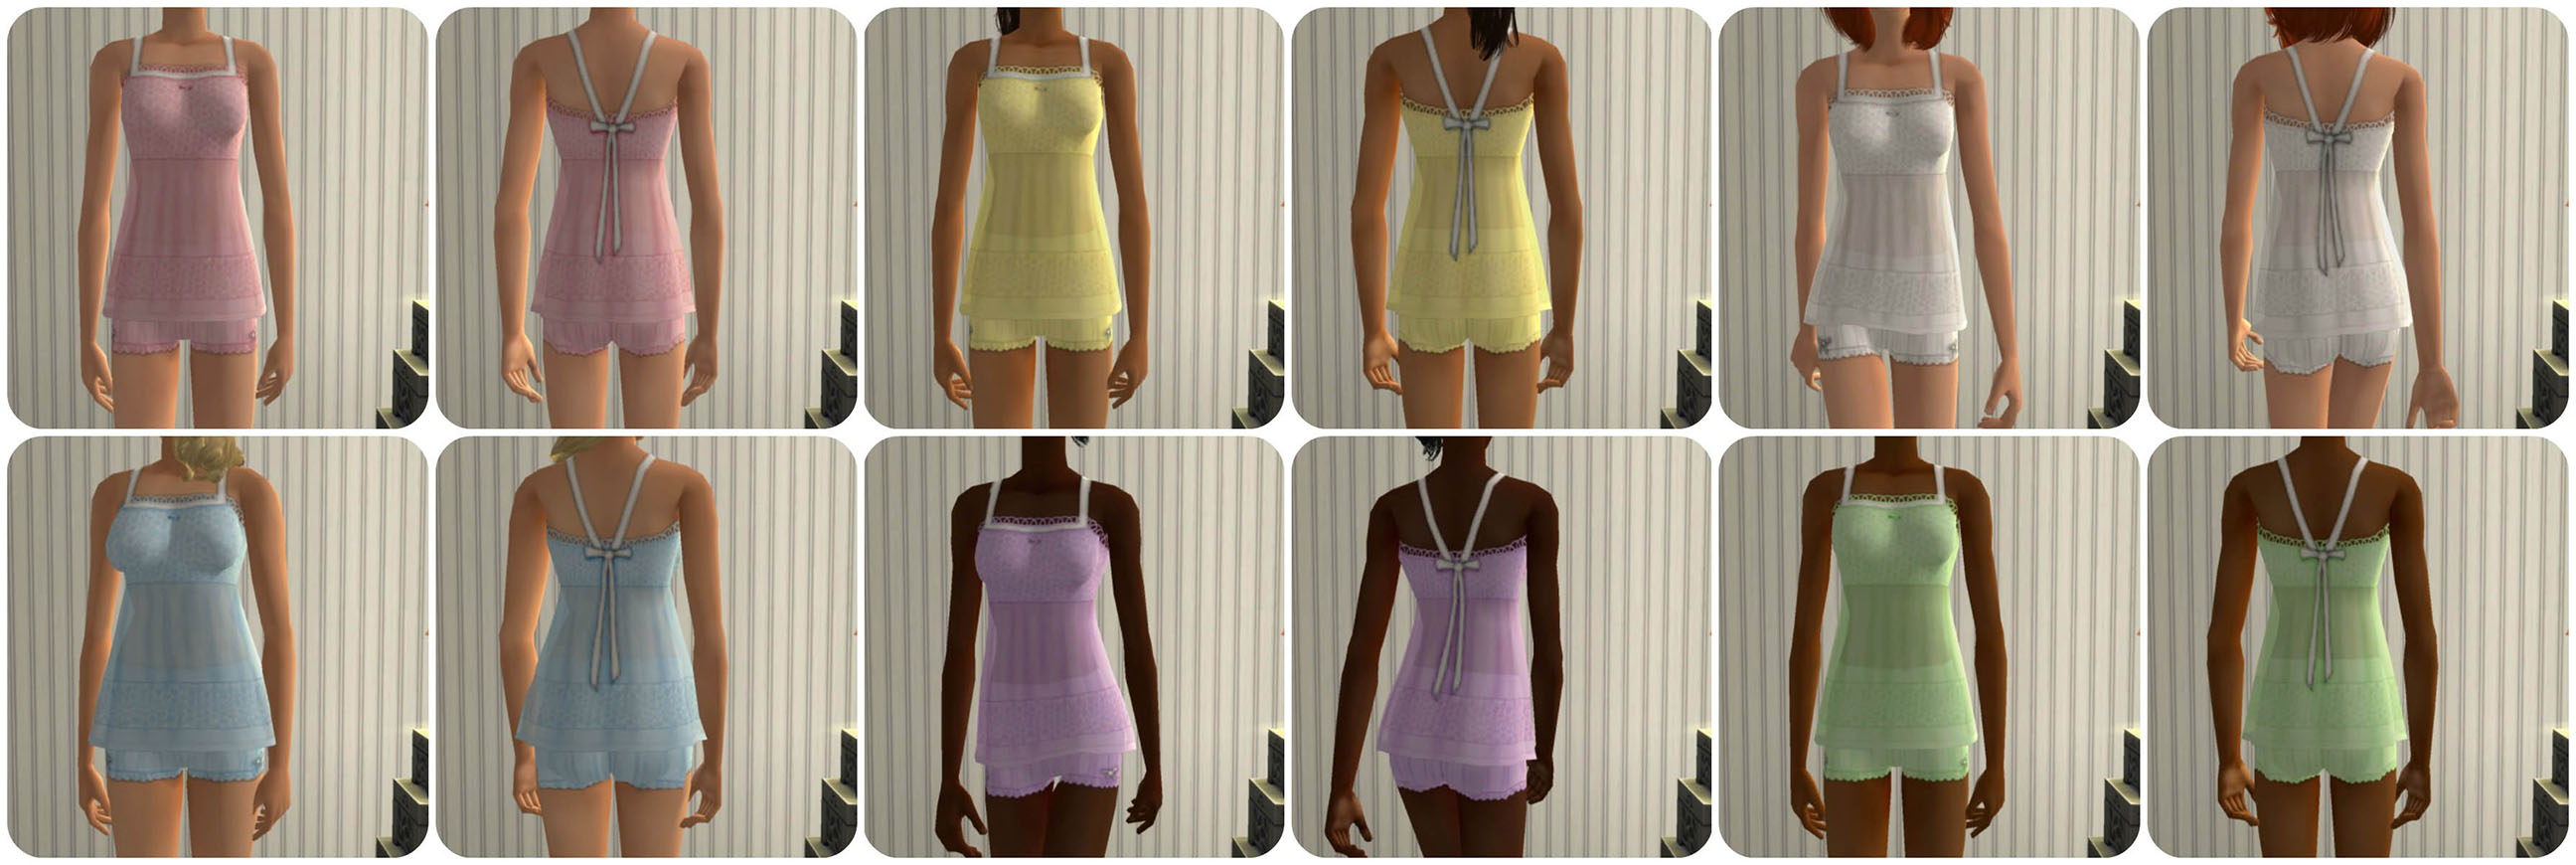 Mod The Sims Barbies Boudoir Collection 